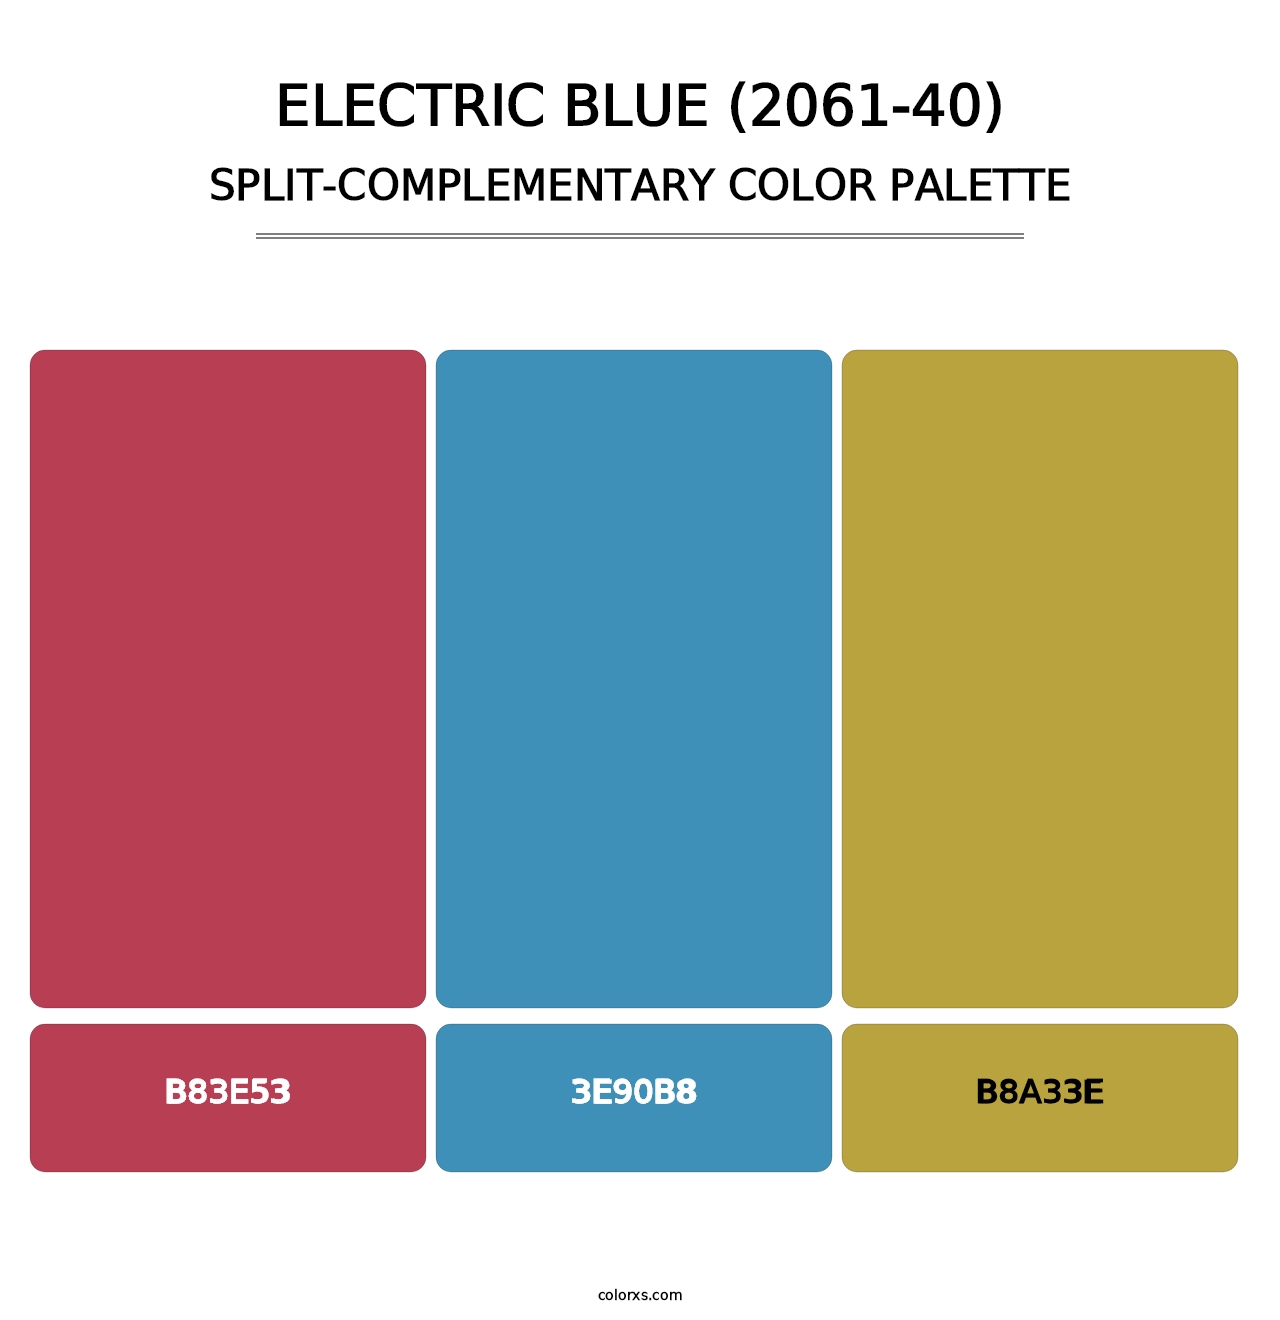 Electric Blue (2061-40) - Split-Complementary Color Palette